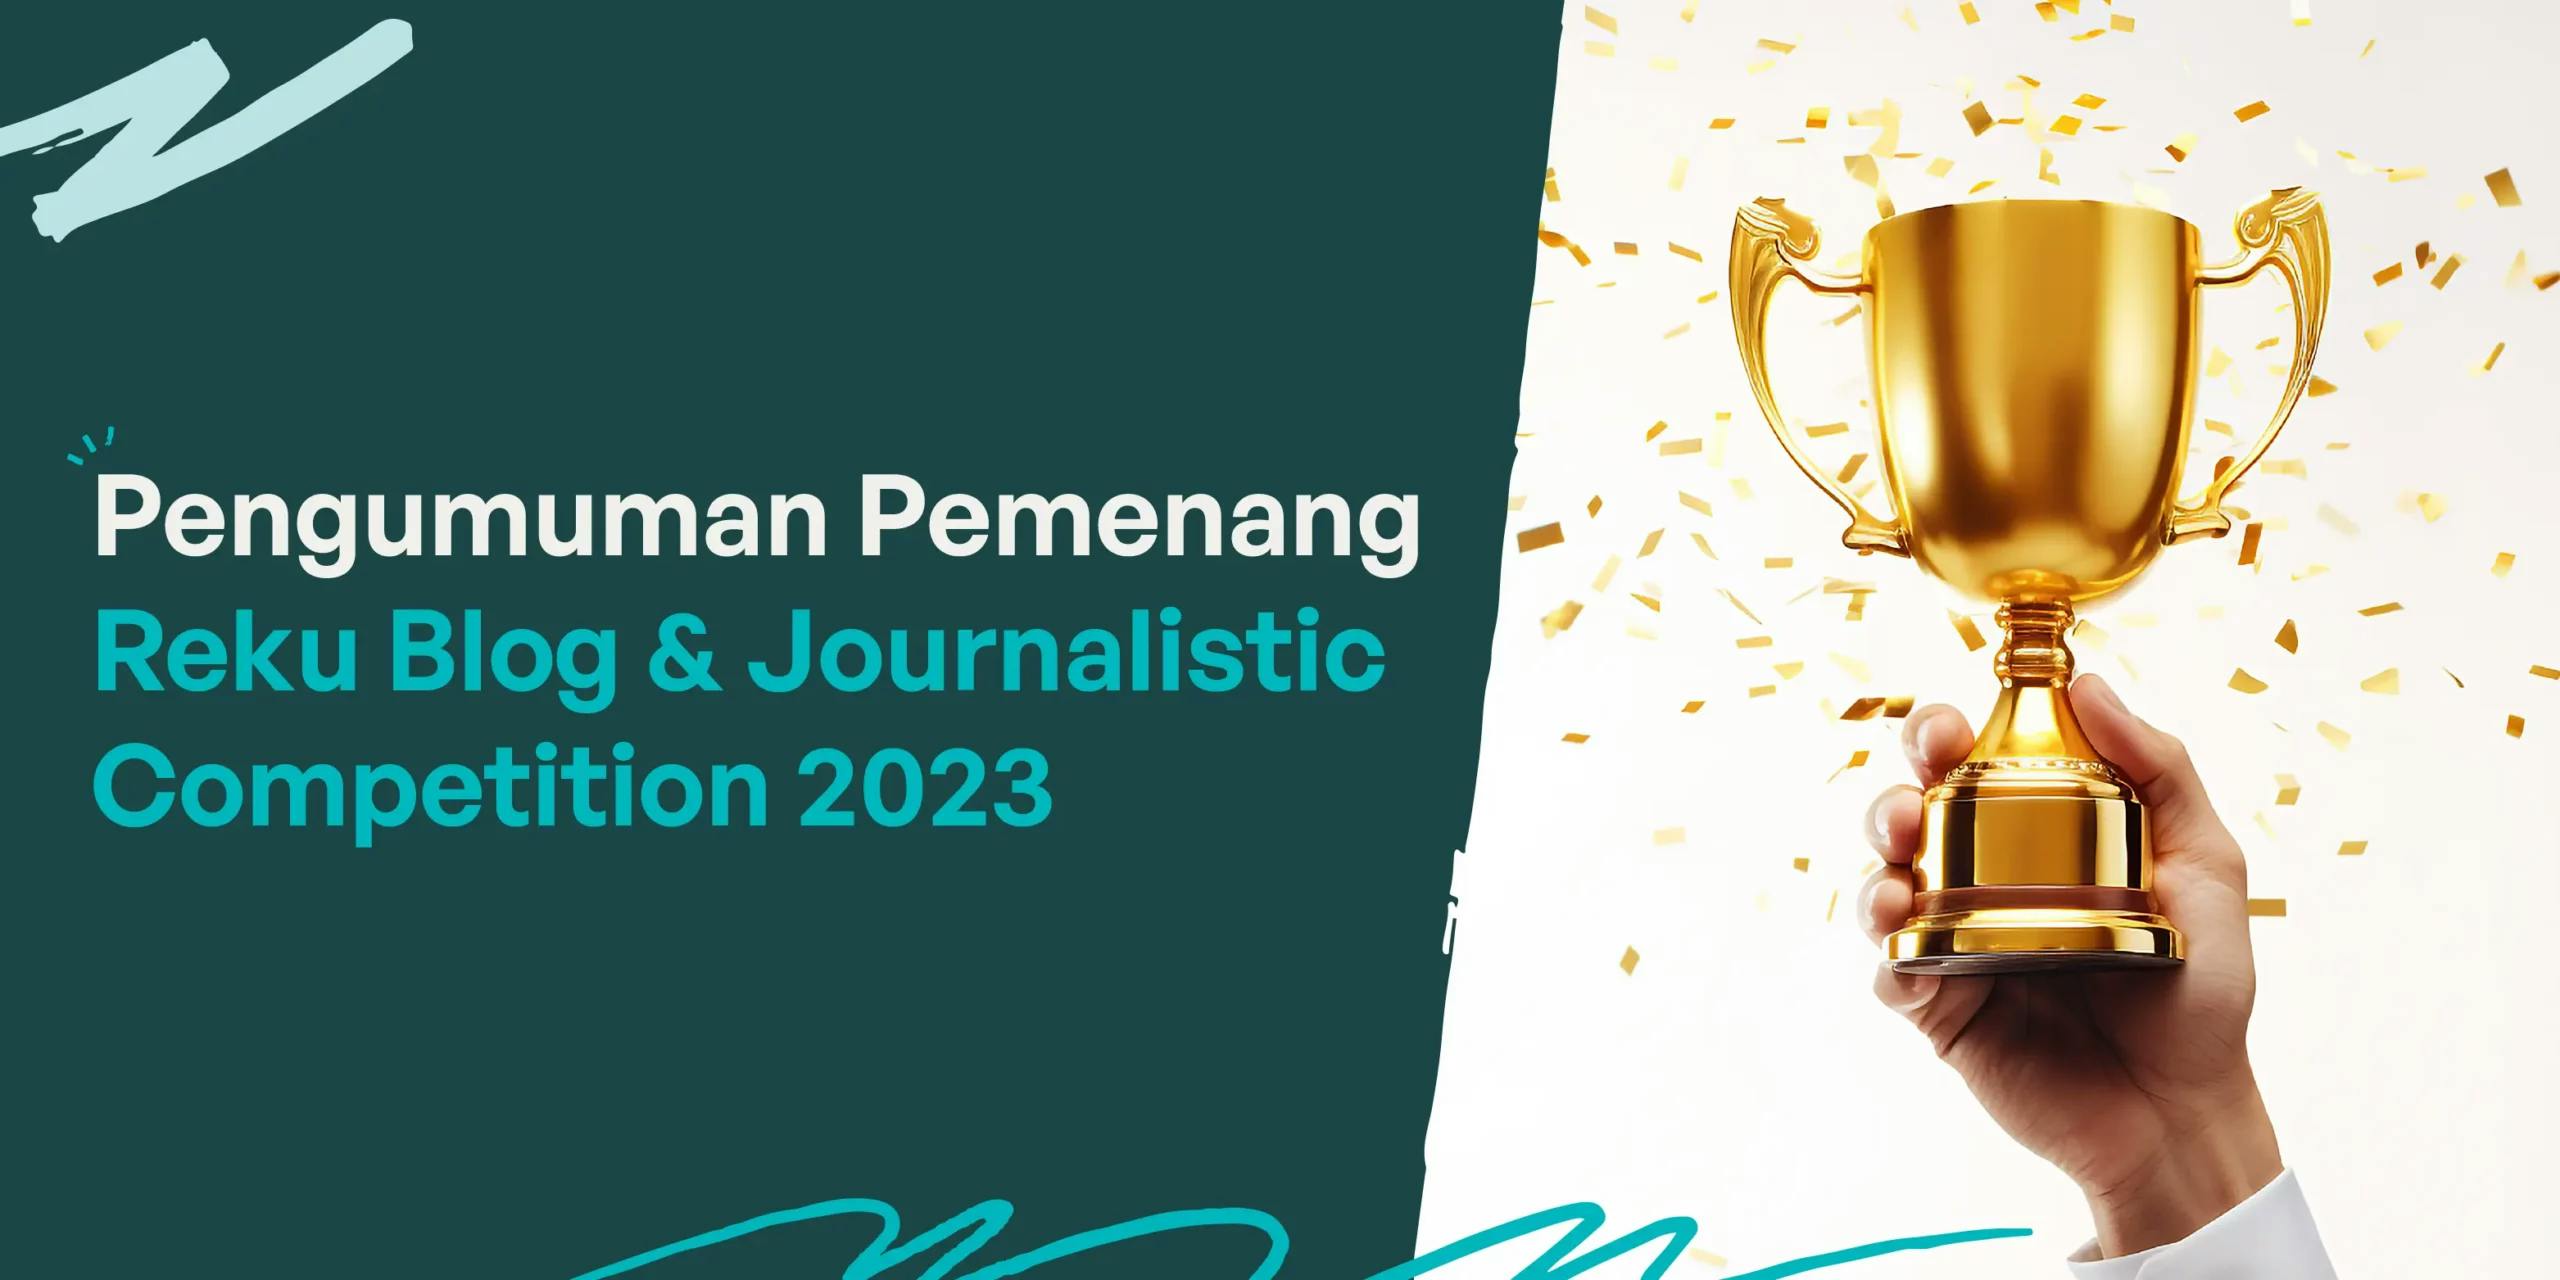 Pengumuman Pemenang Reku Blog & Journalistic Competition 2023